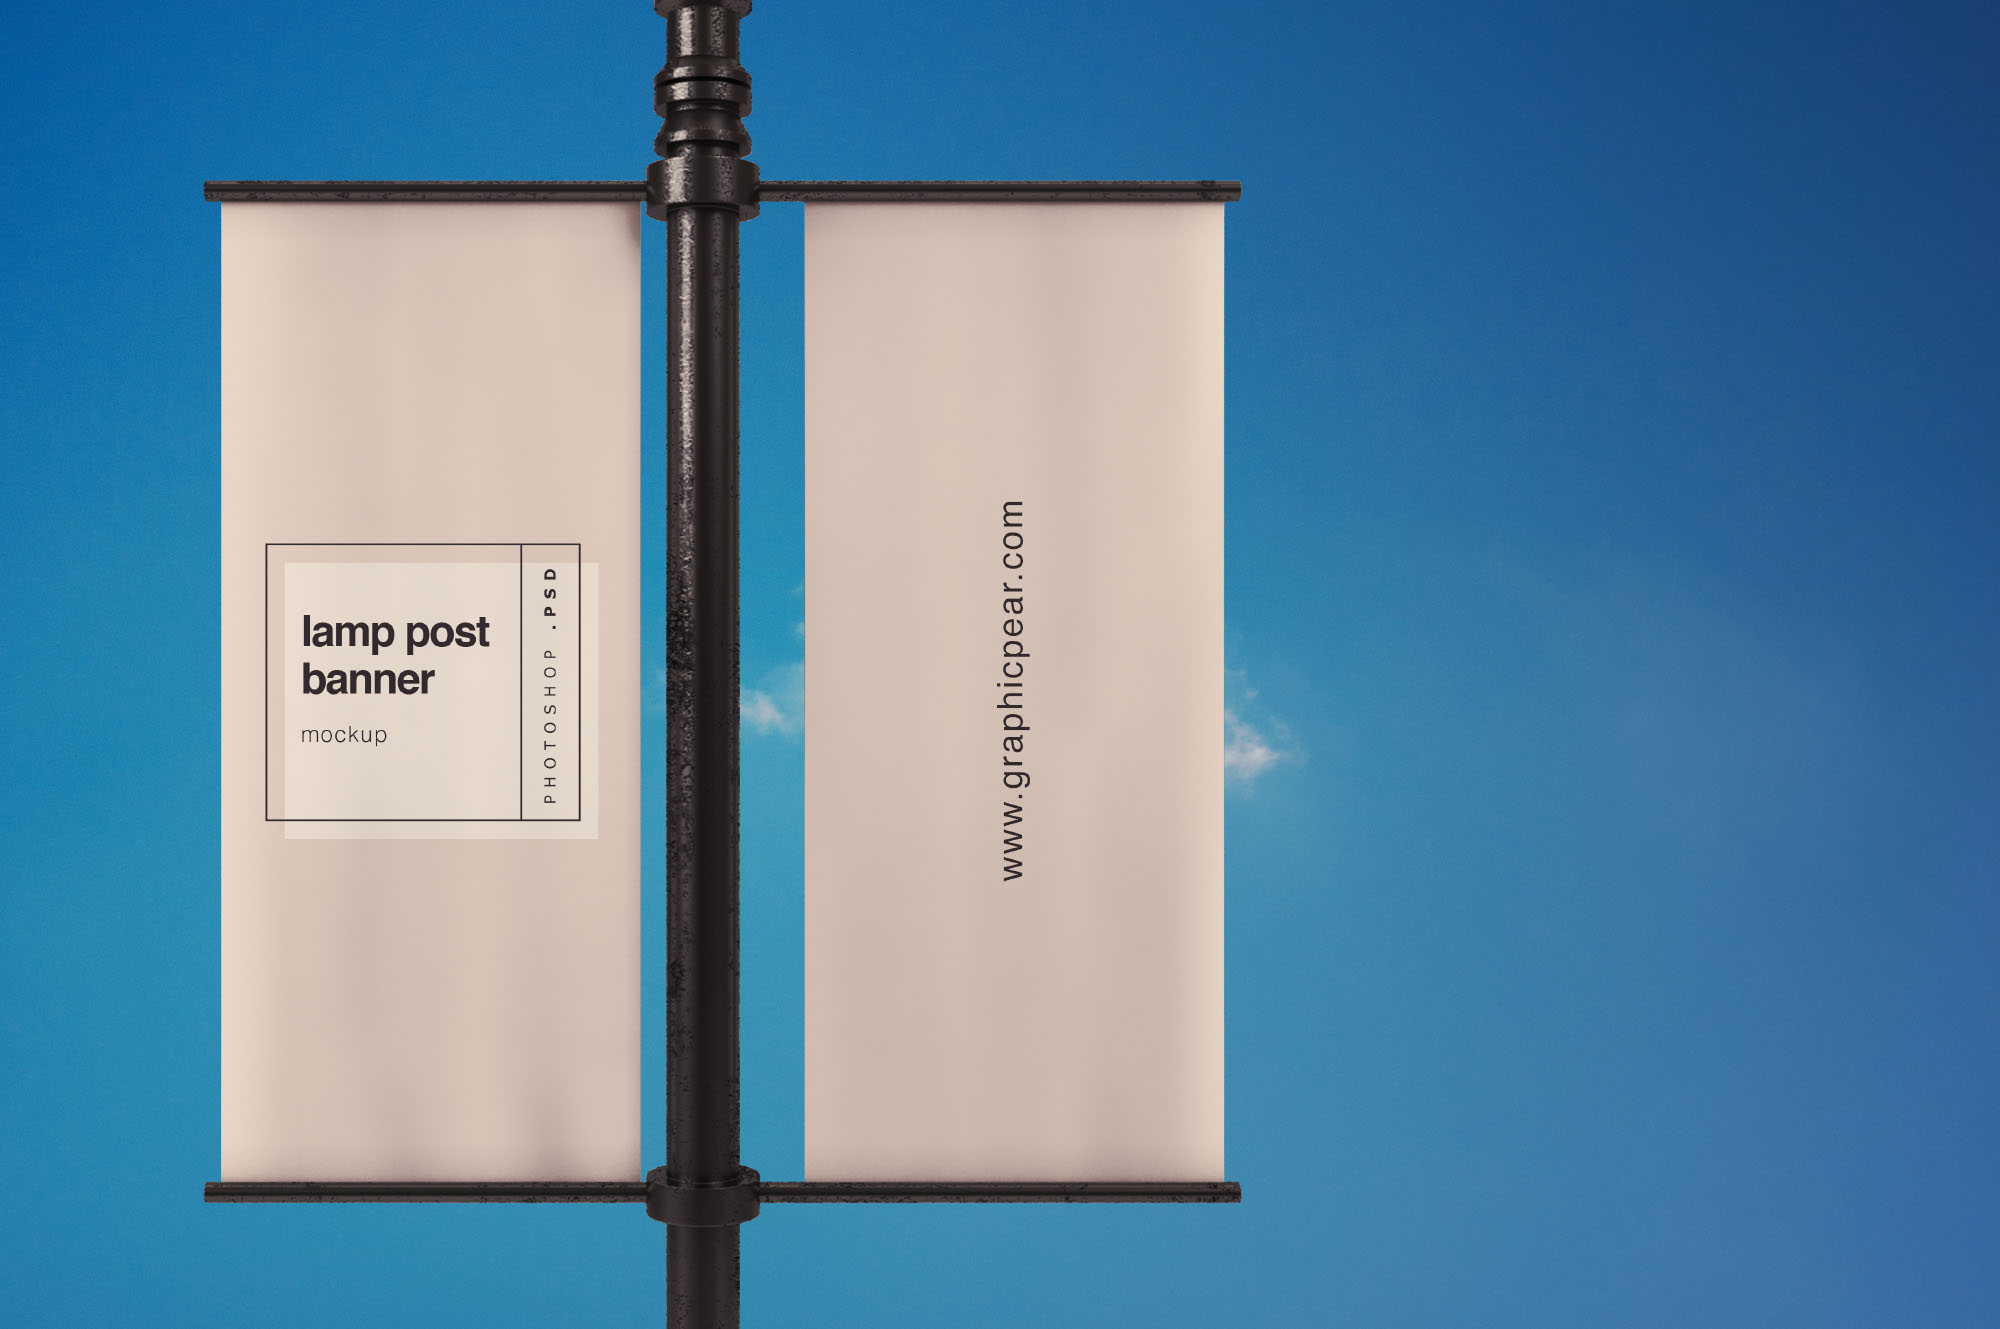 灯柱旗帜广告设计效果图样机模板 Lamp Post Banner Mockup插图